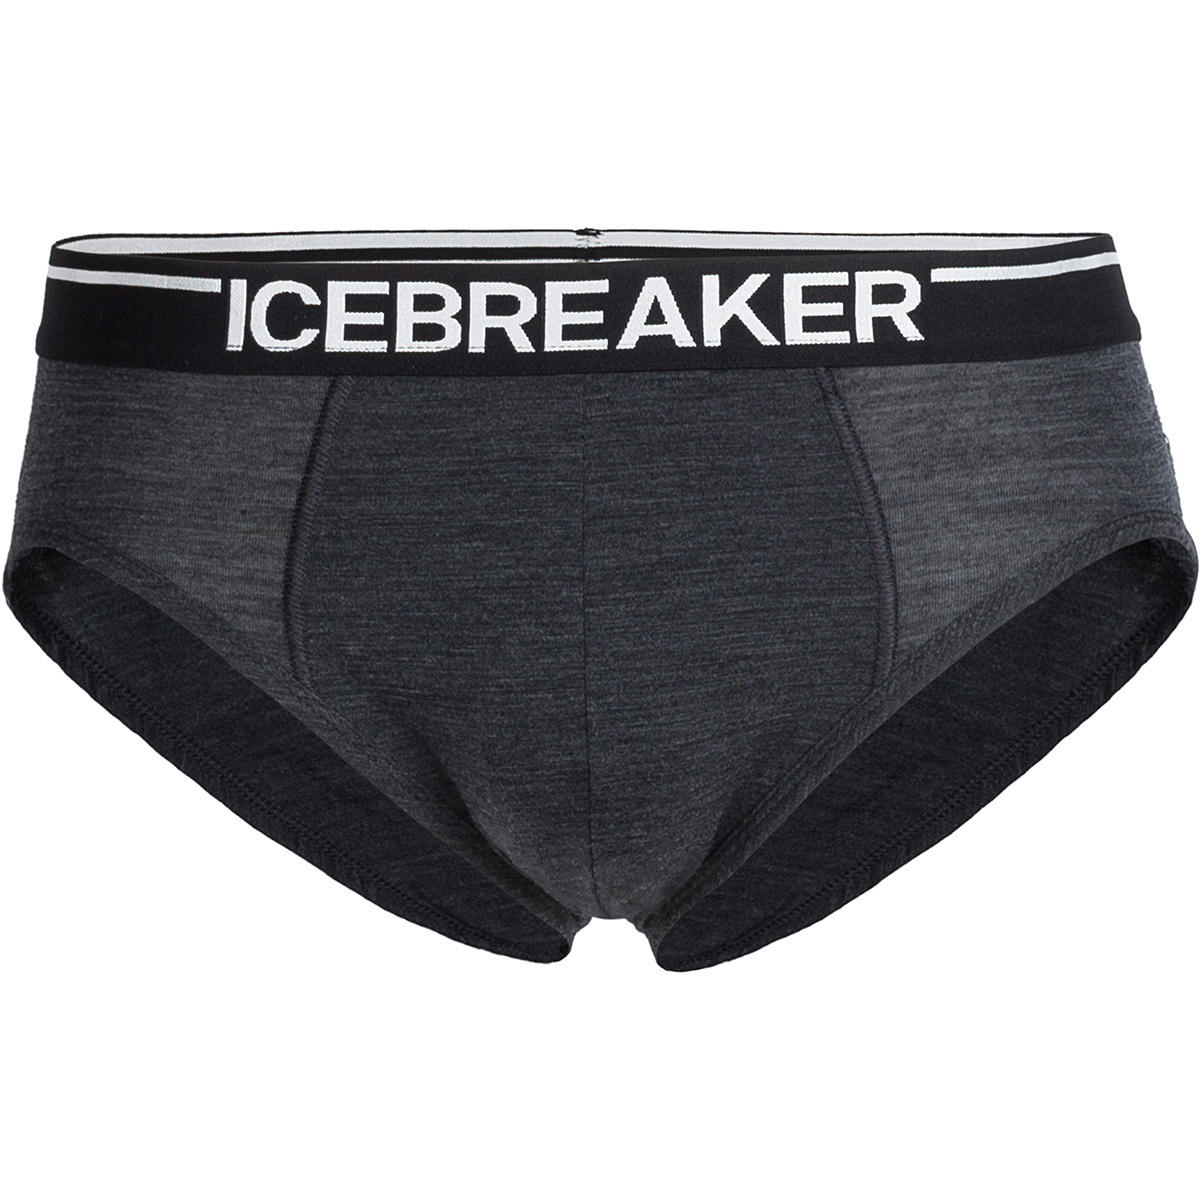 Icebreaker Herren Anatomica Unterhose von Icebreaker